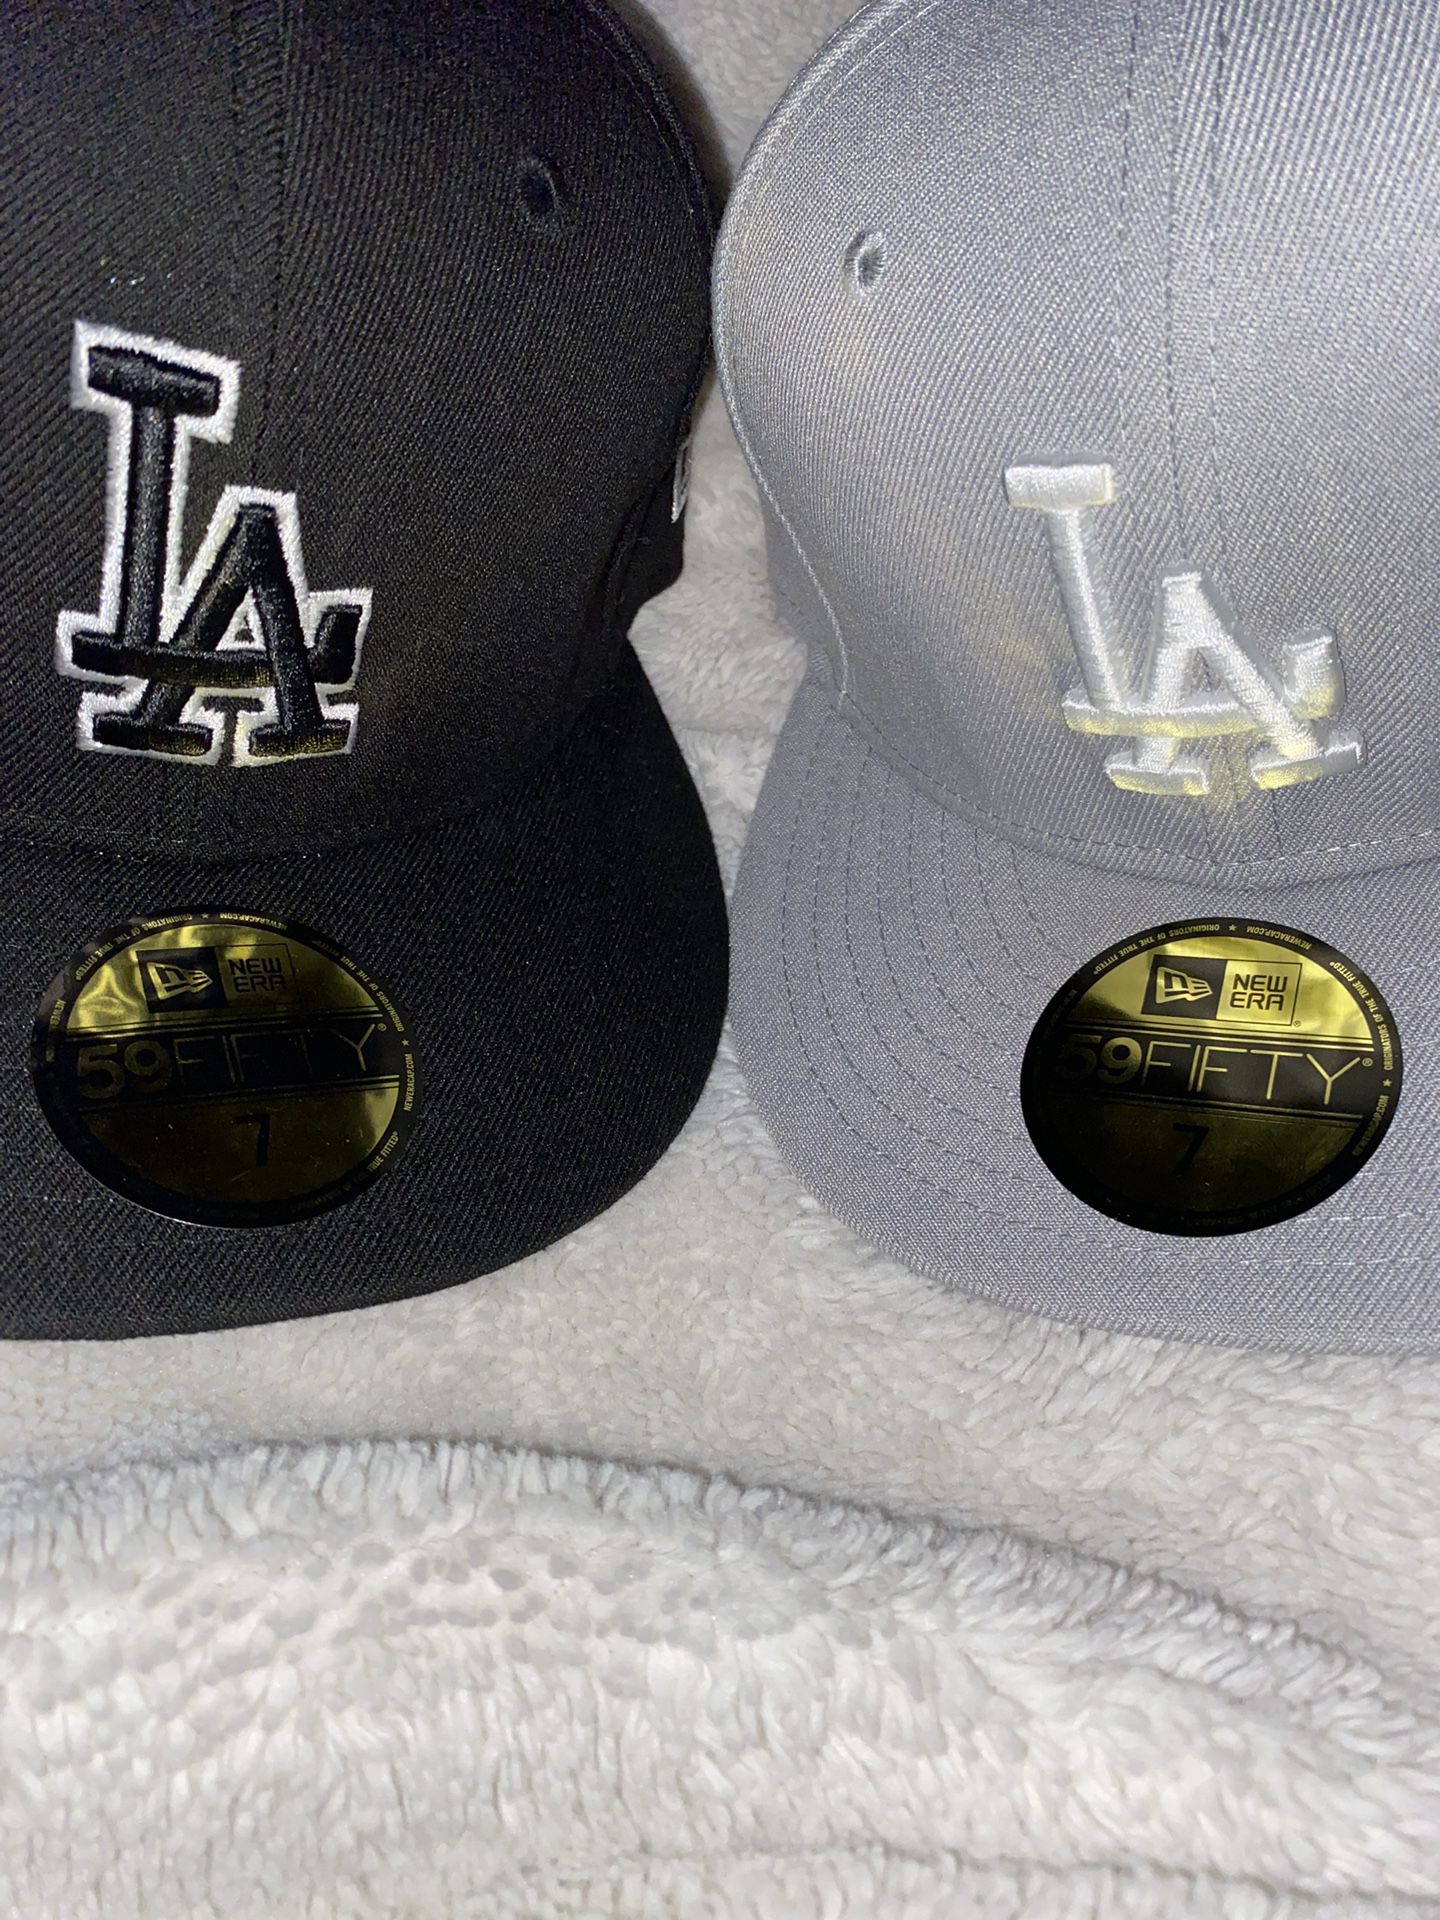 LA Hat 